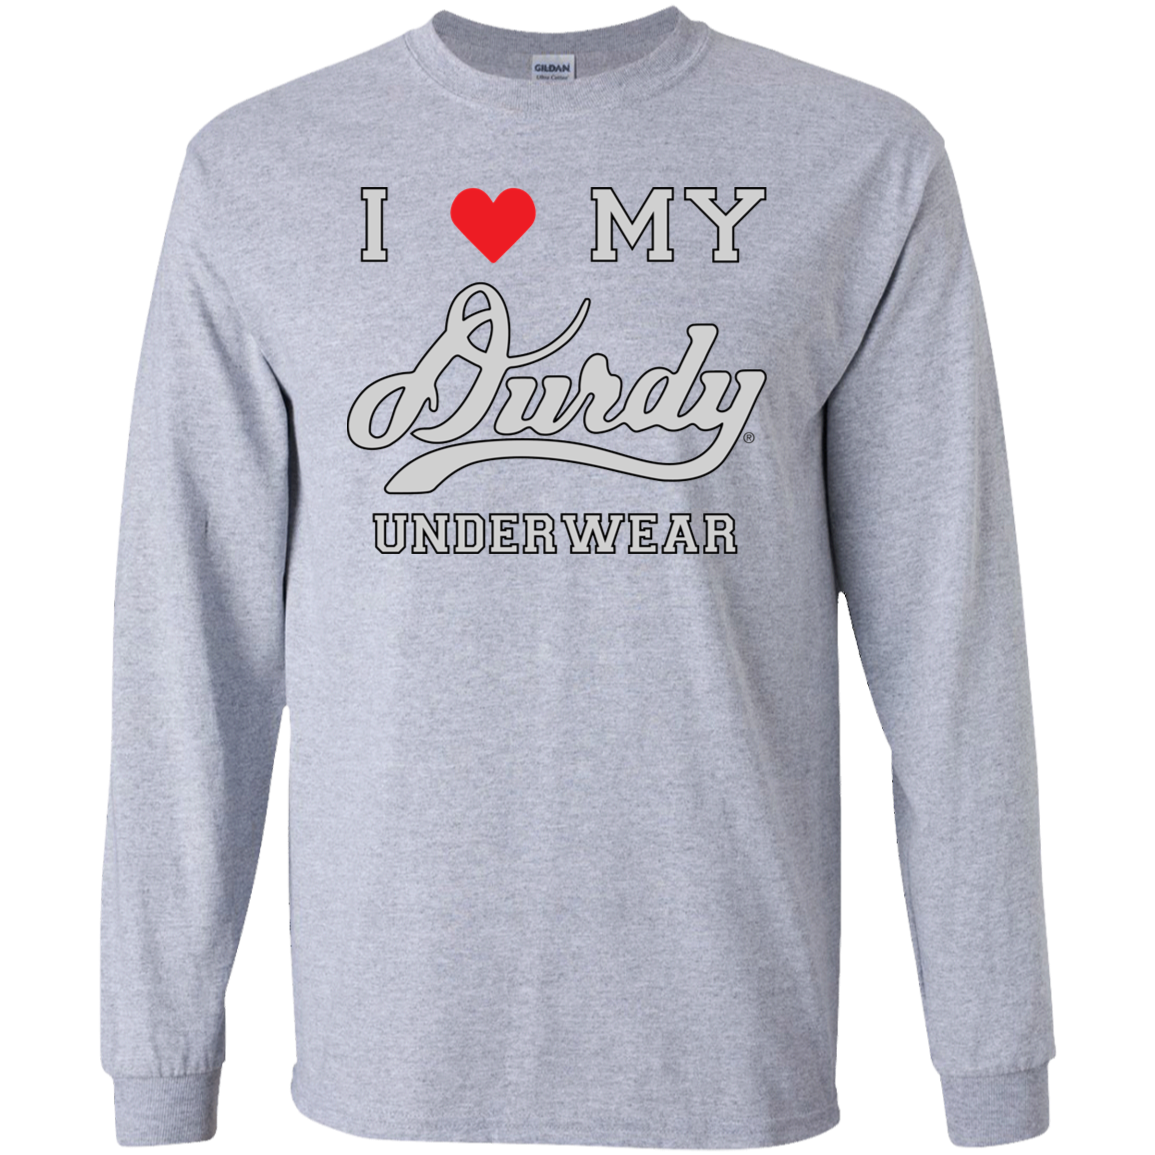 I Love Durdy Underwear Gildan LS Ultra Cotton T-Shirt